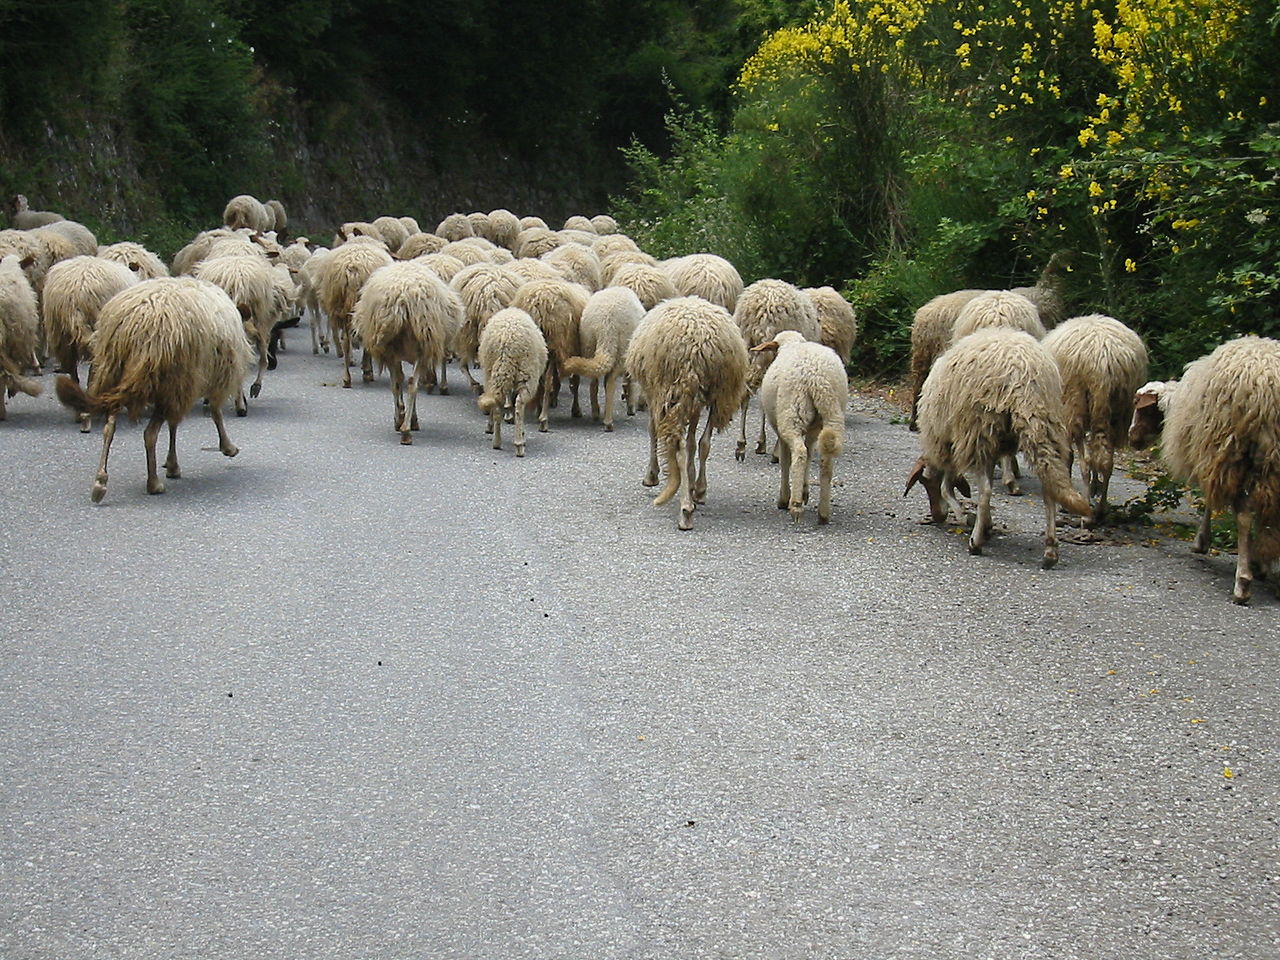 Flock of Sheep near Roghudi Vecchio - Province of Reggio Calabria, Italy - June 2004.jpg